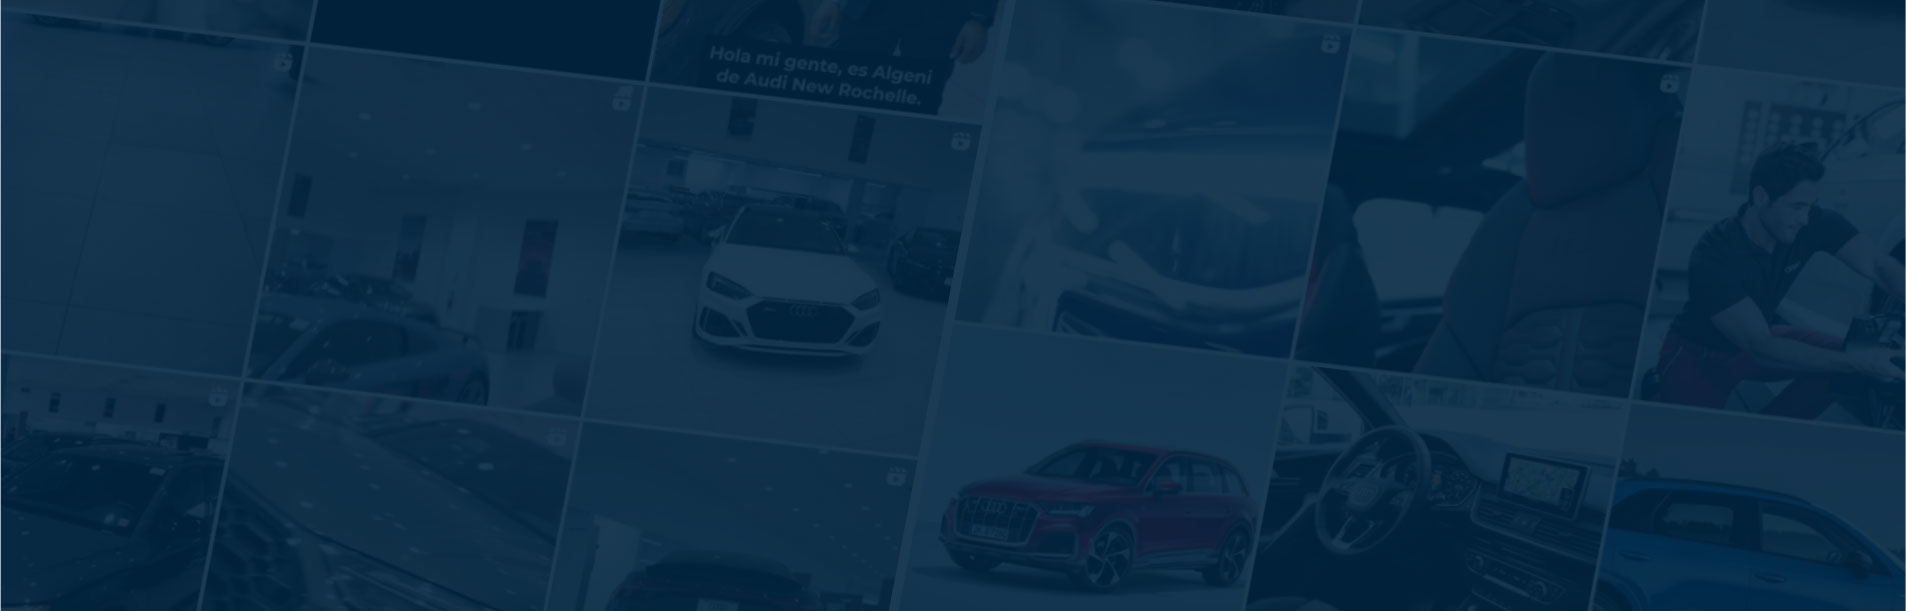 Audi New Rochelle automotive social media banner